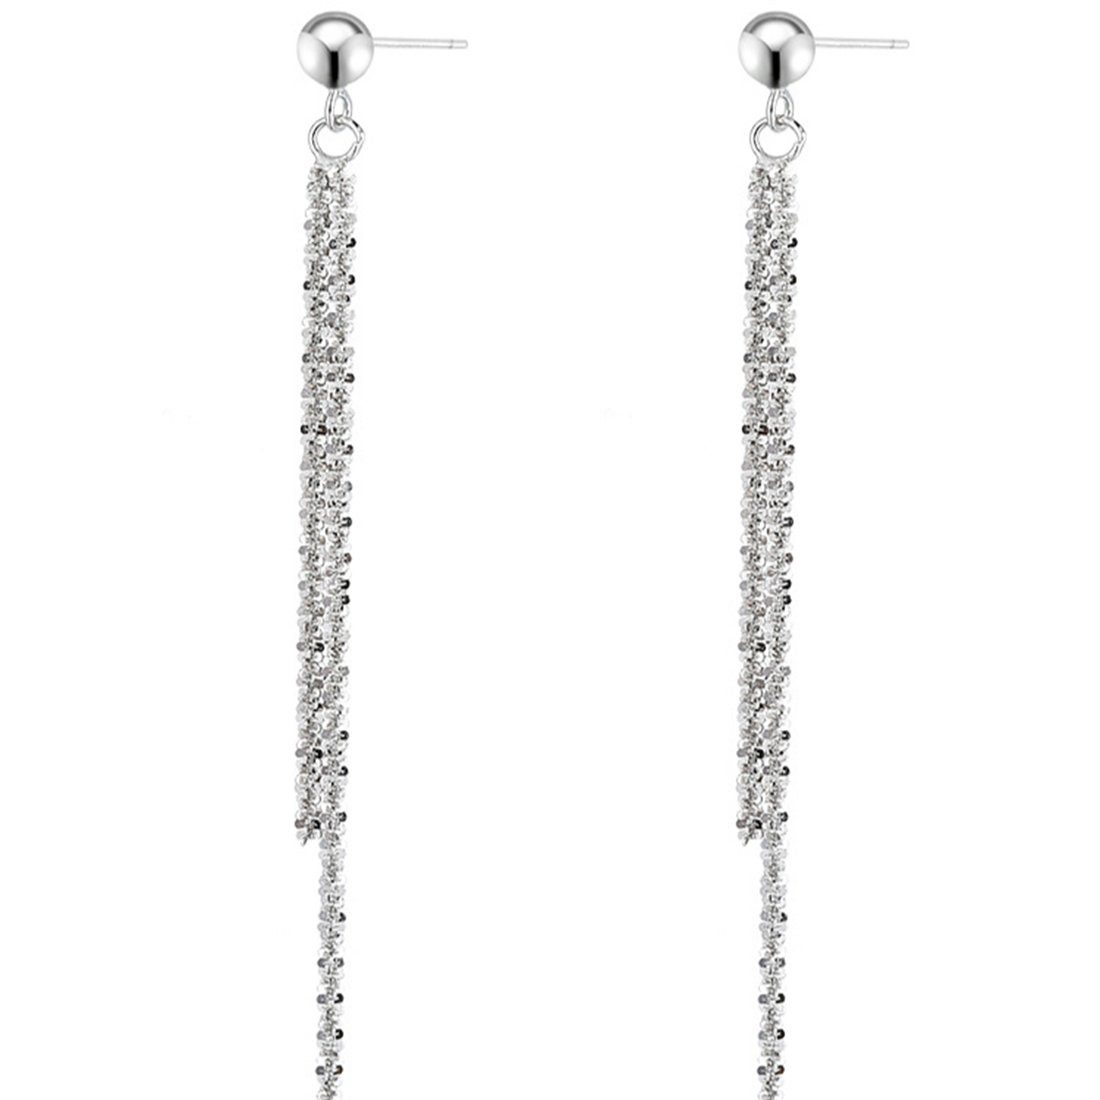 Haiaveng Paar Ohrhänger 925 Sterling Silber Ohrringe,Voller Stern Quasten-Ohrringe, Lange Quastenohrringe für Damen